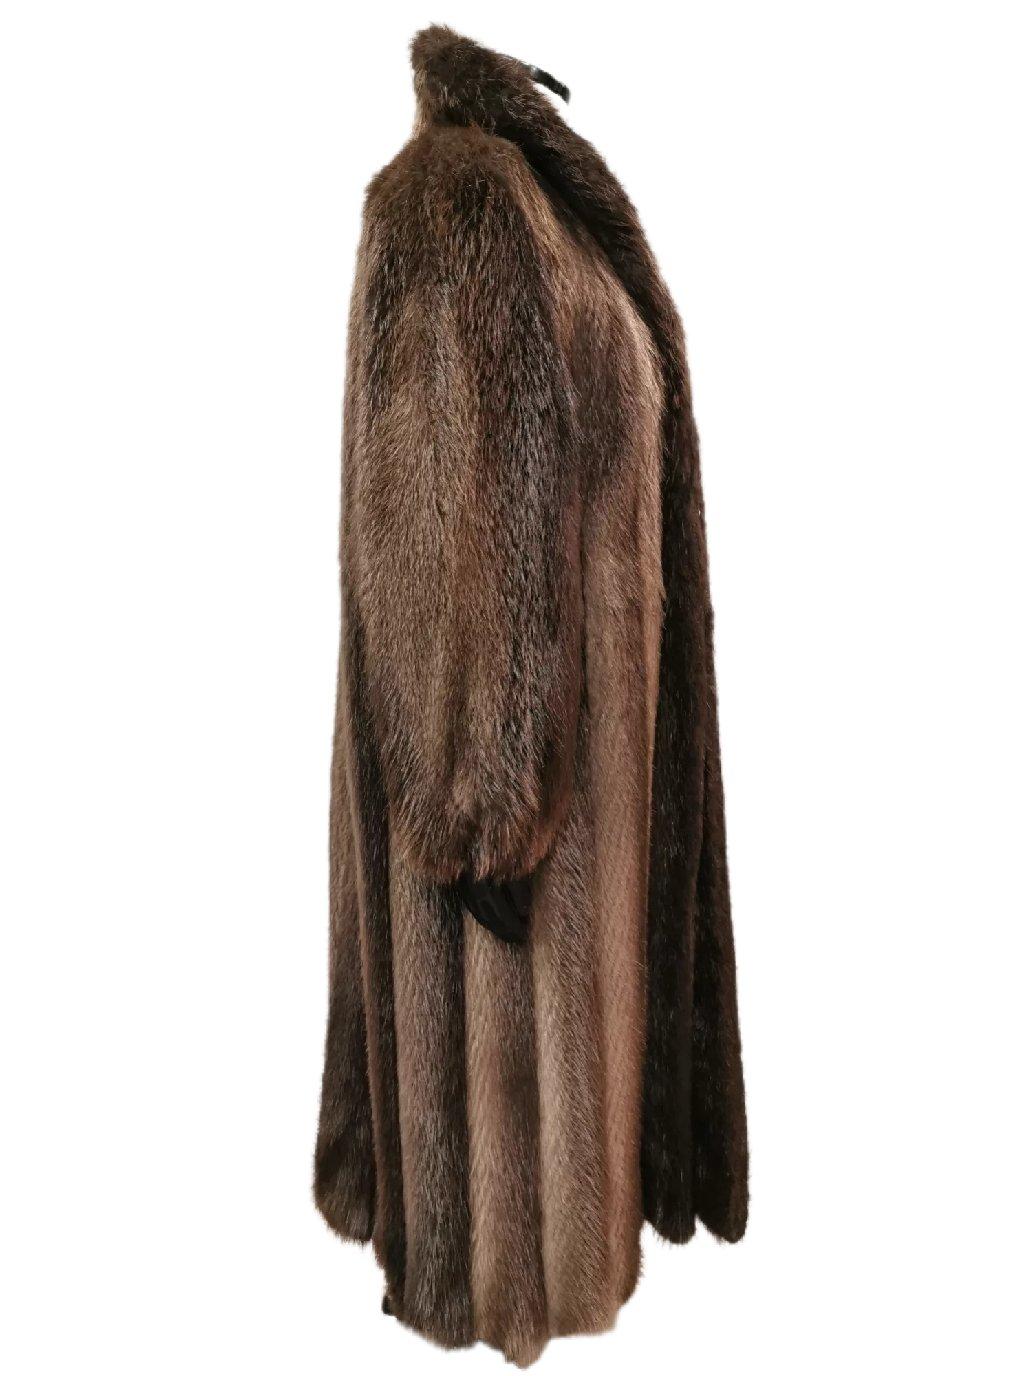 beaver skin coat